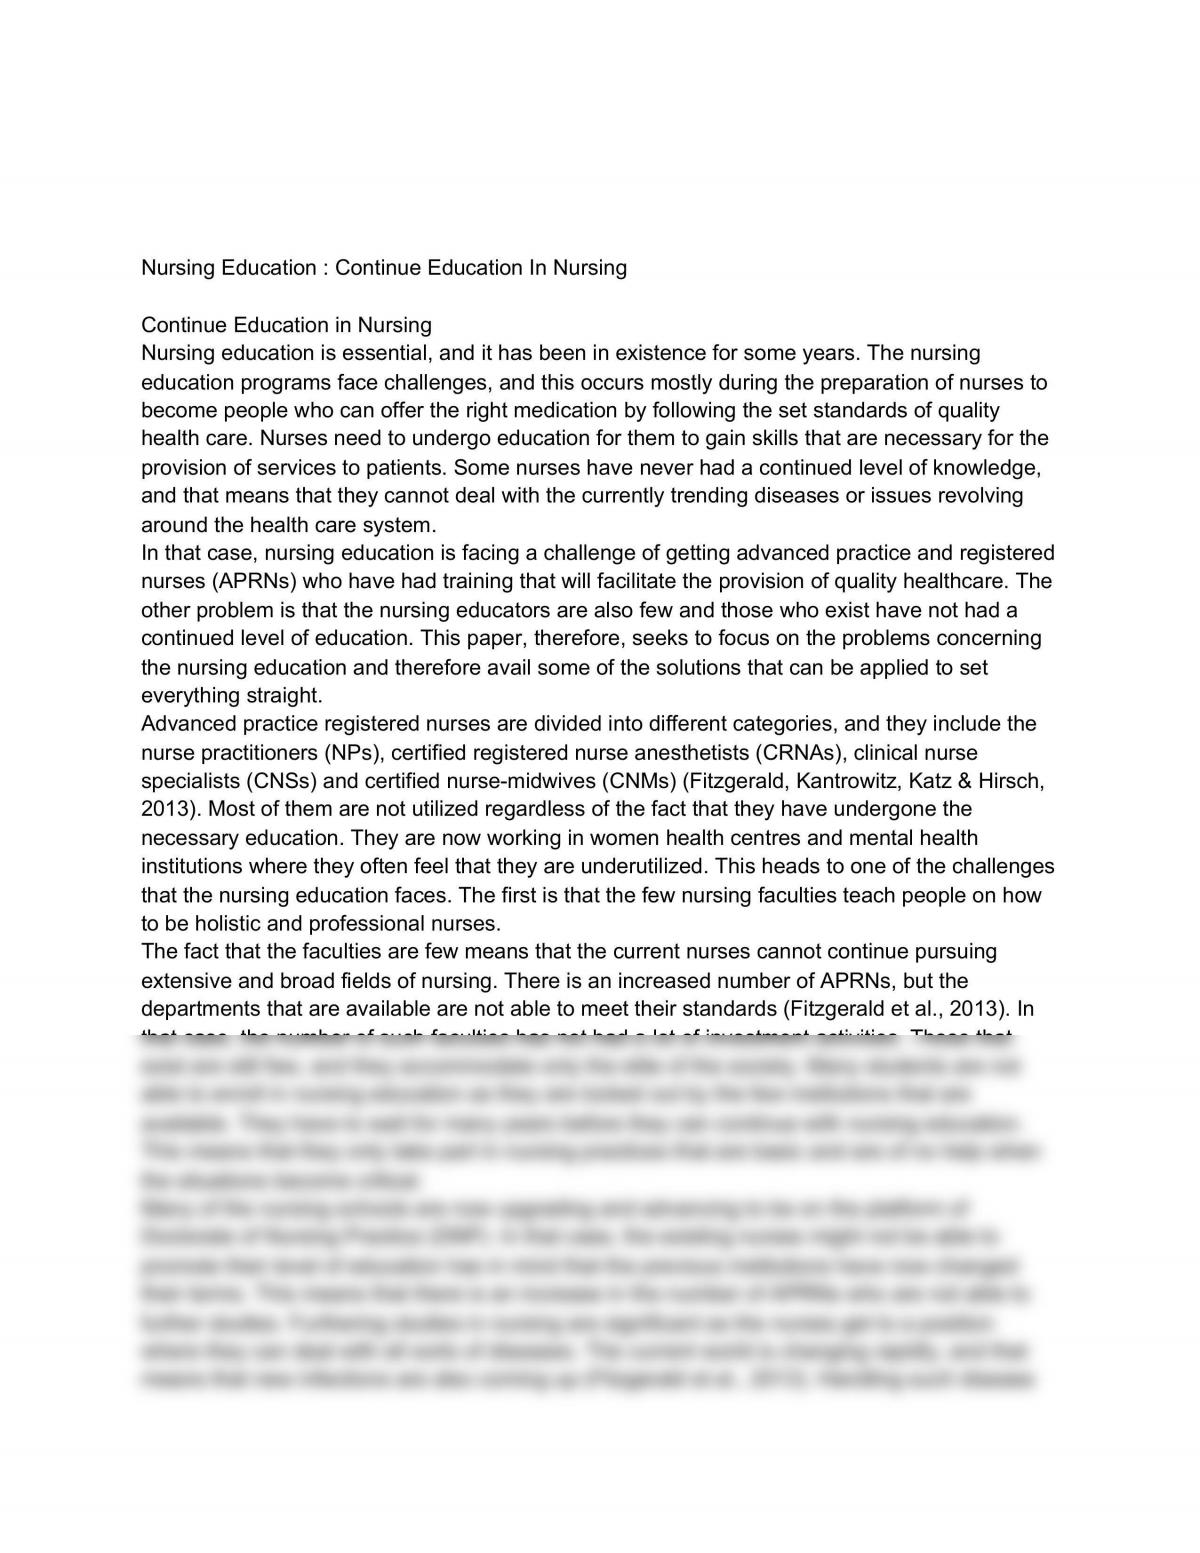 Nursing Education : Continue Education In Nursing - Page 1